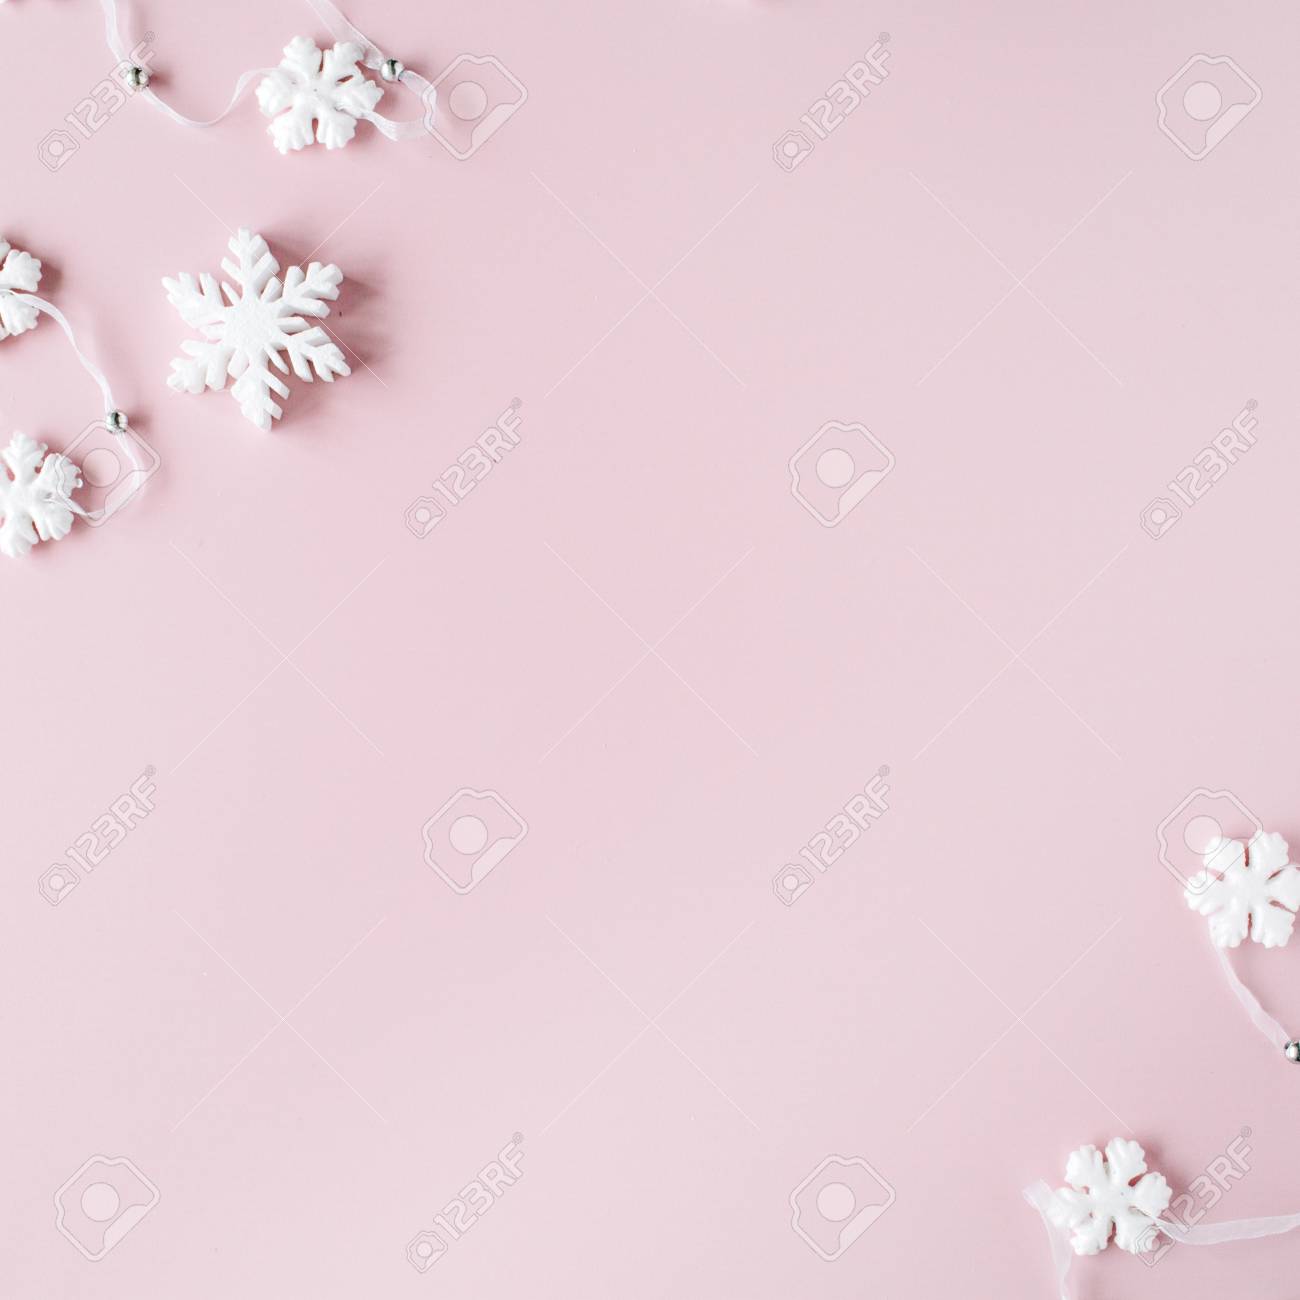 White Christmas Snowflakes Decoration On Pink Background